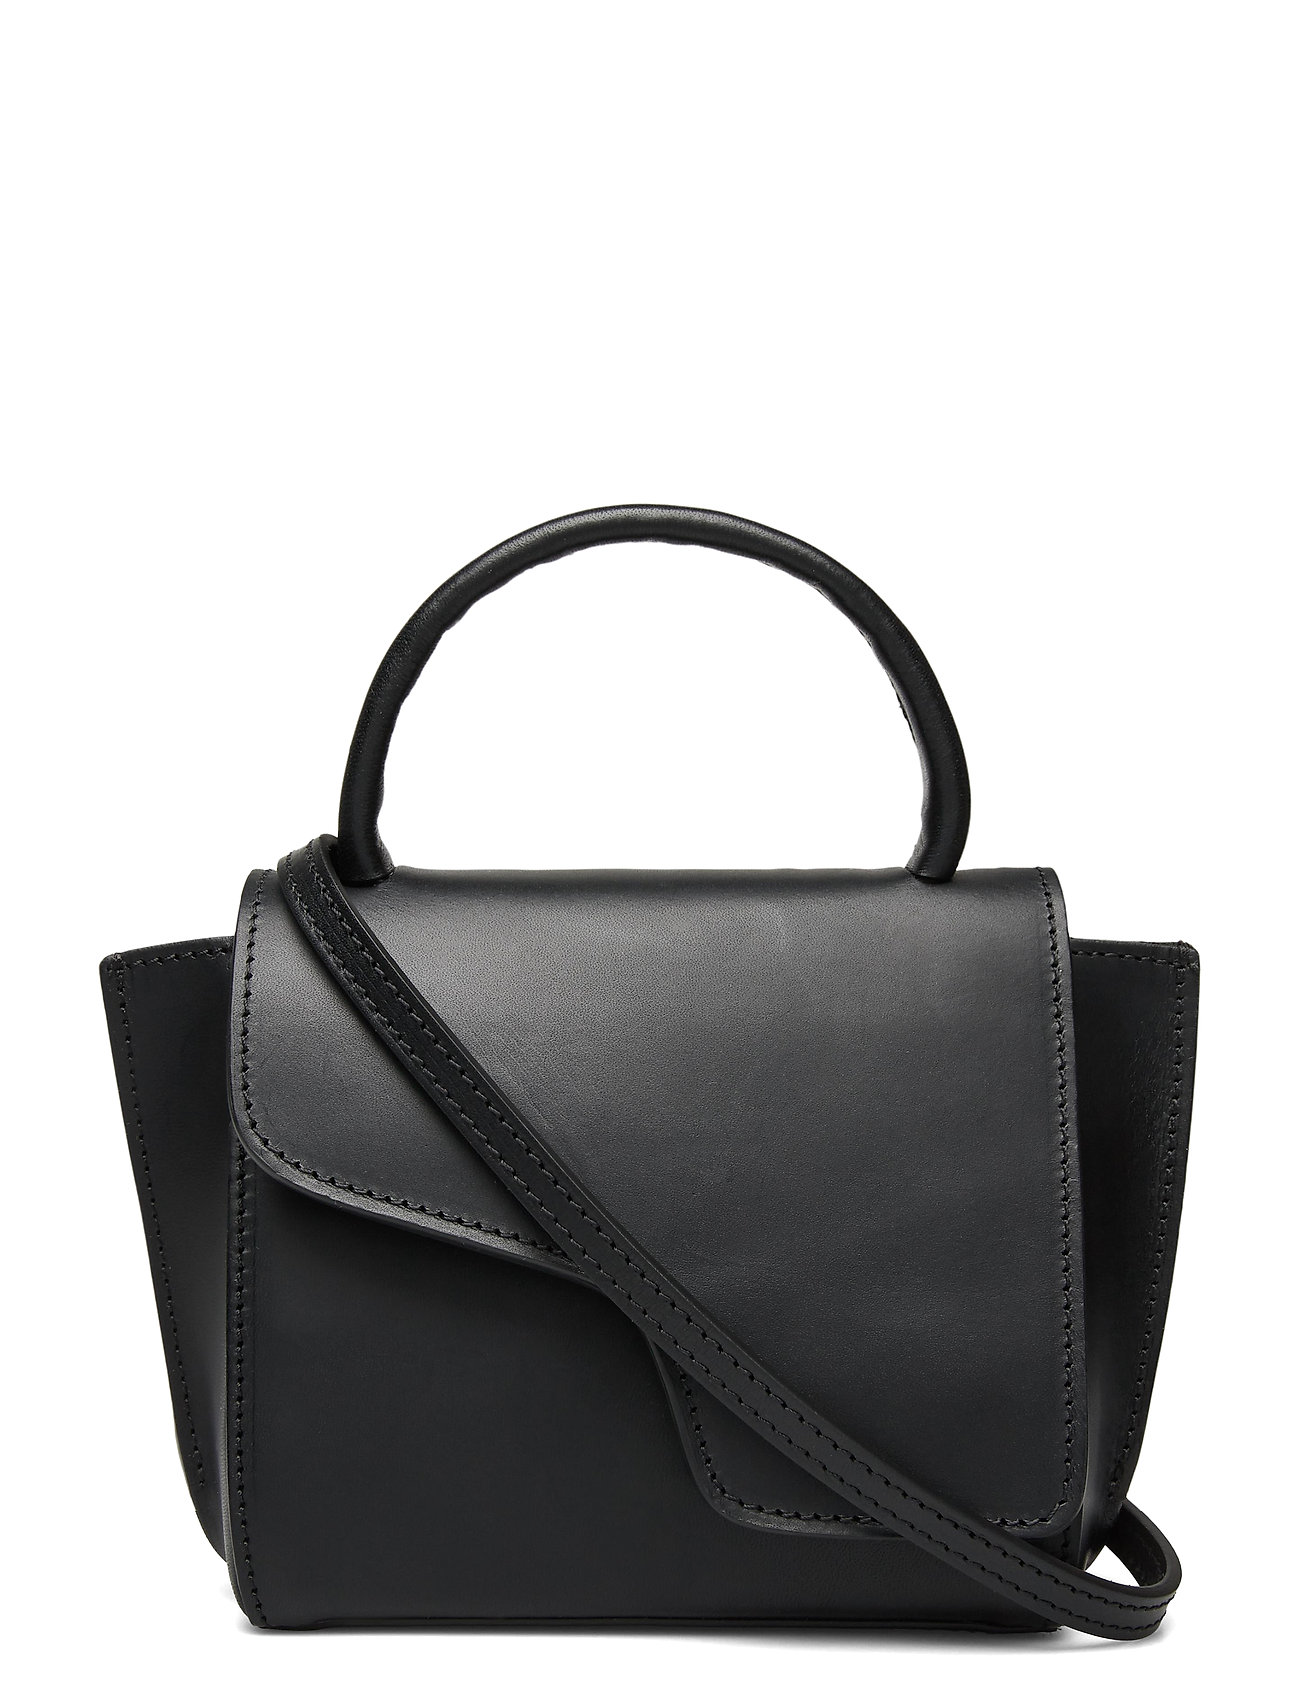 Montalcino Black Mini Handbag Bags Small Shoulder Bags-crossbody Bags Black ATP Atelier